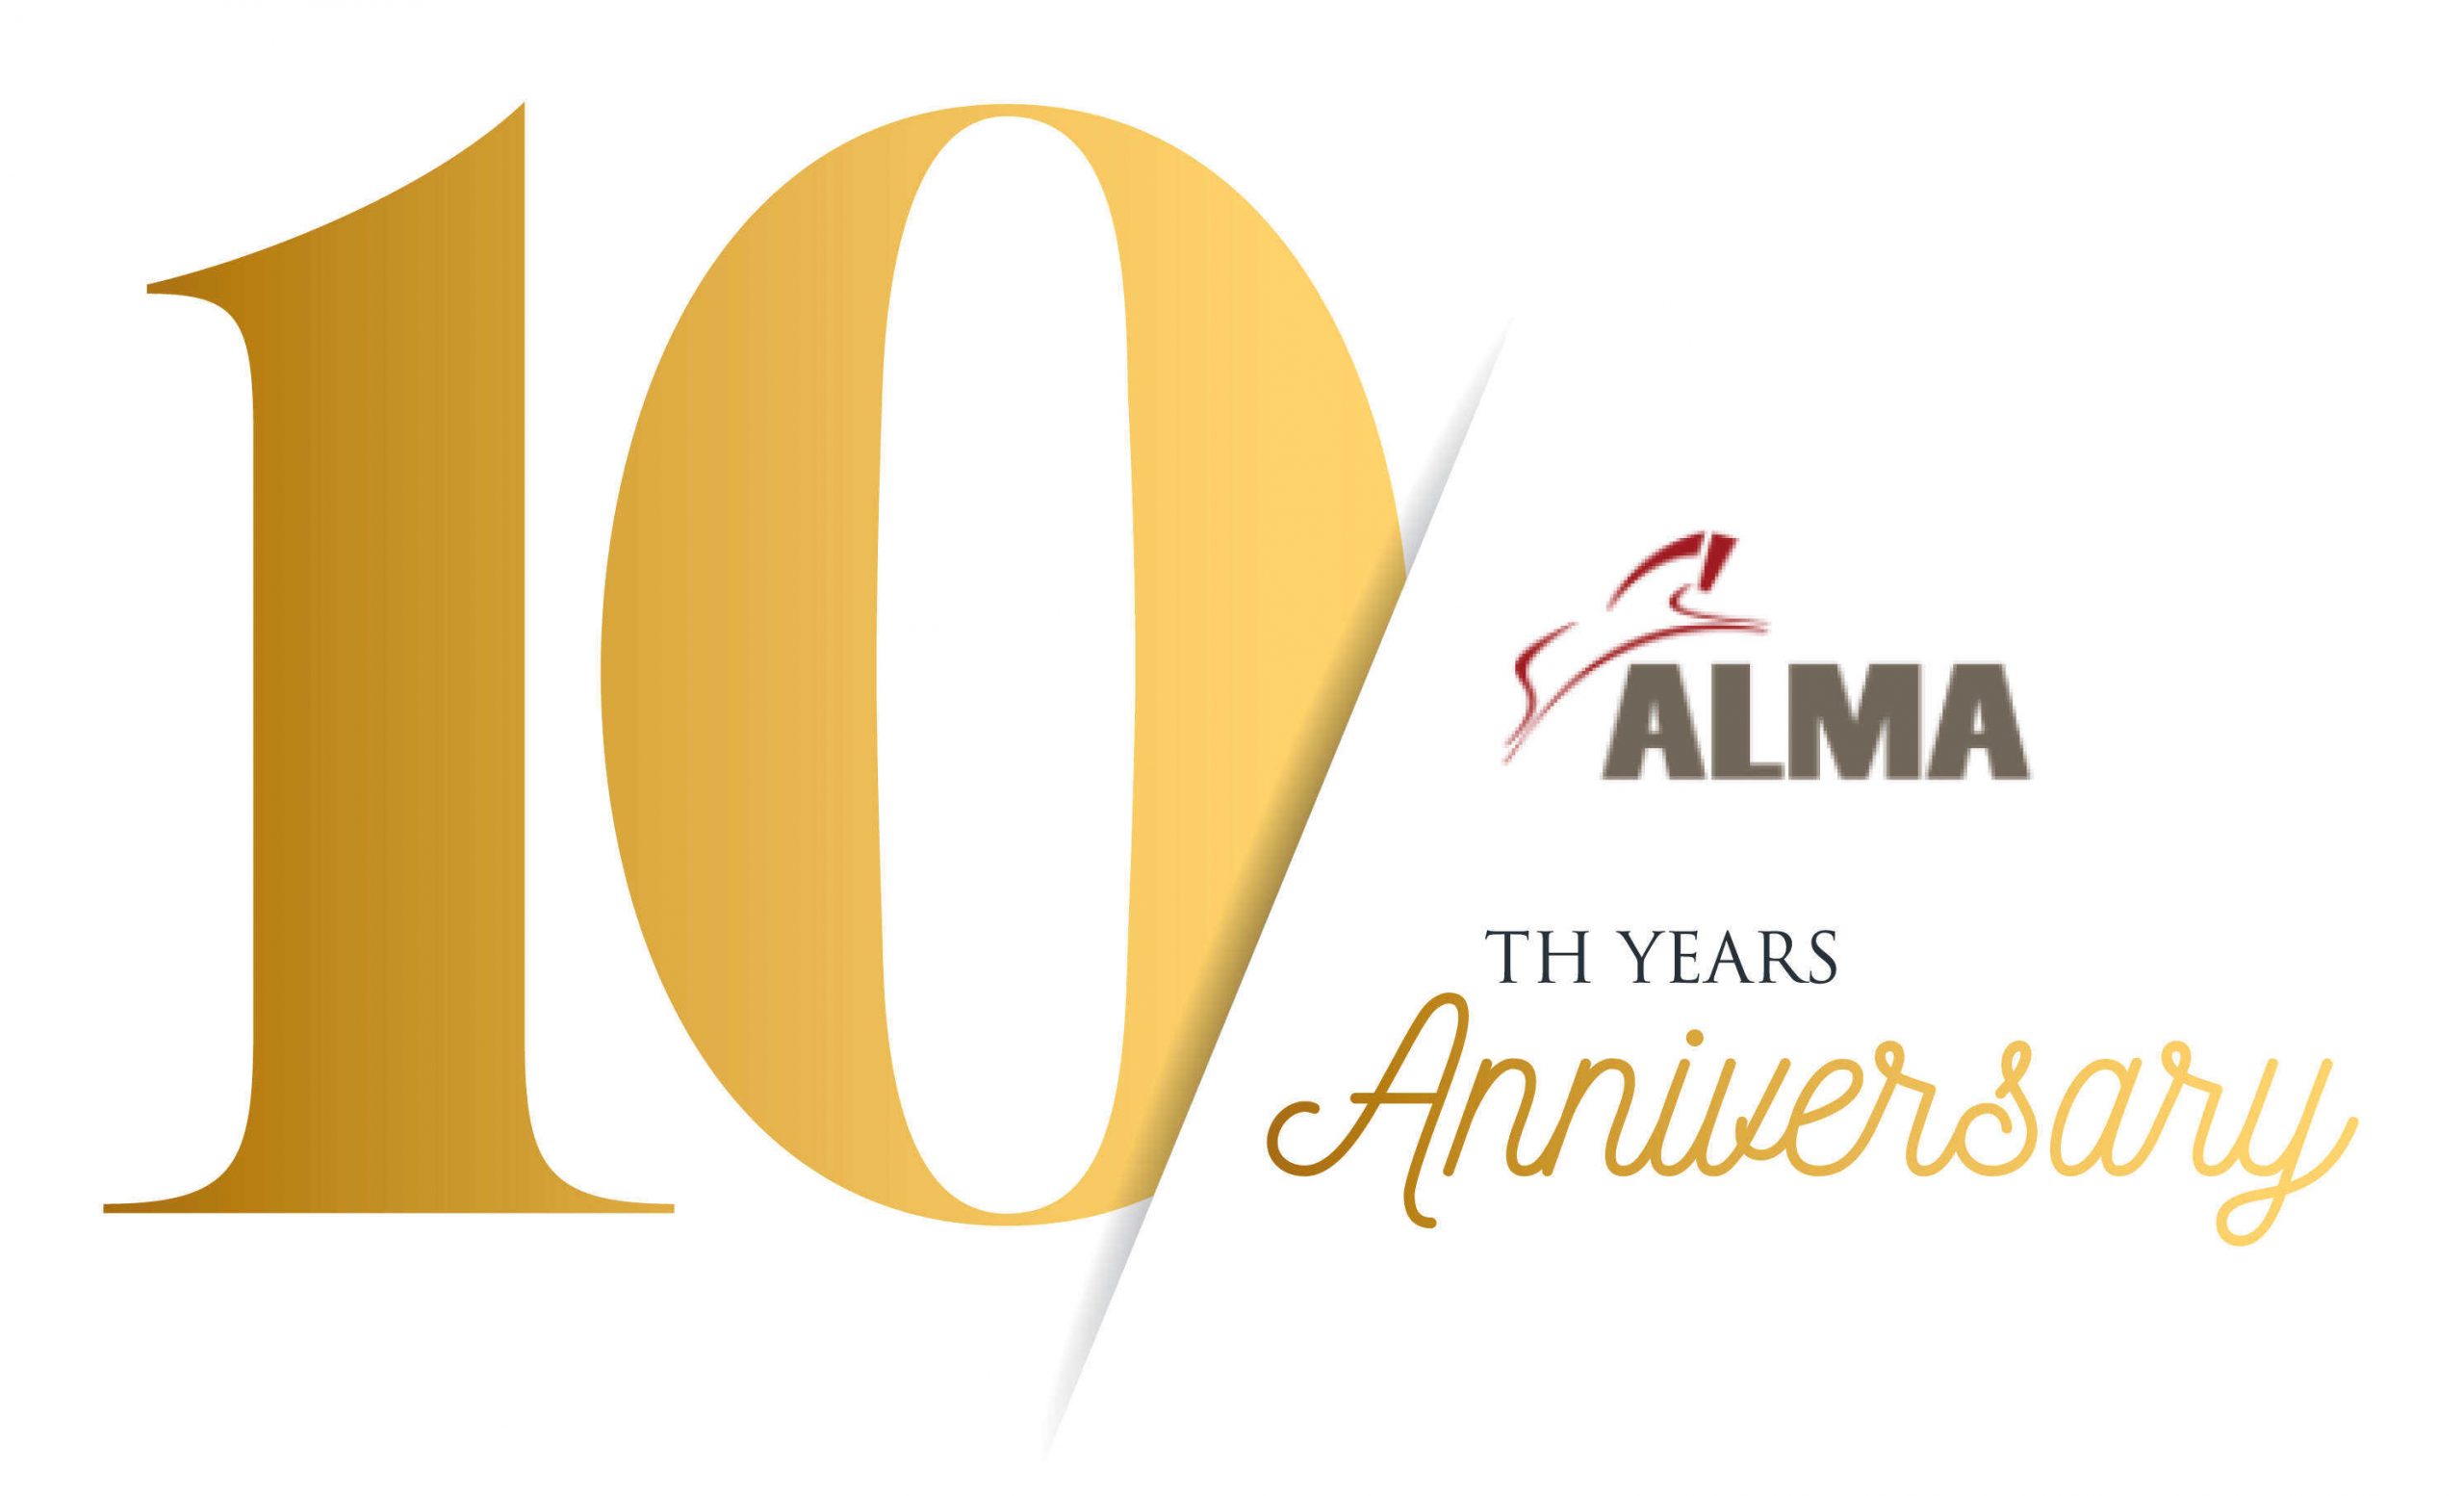 The EU project ALMA ist having its 10th anniversary